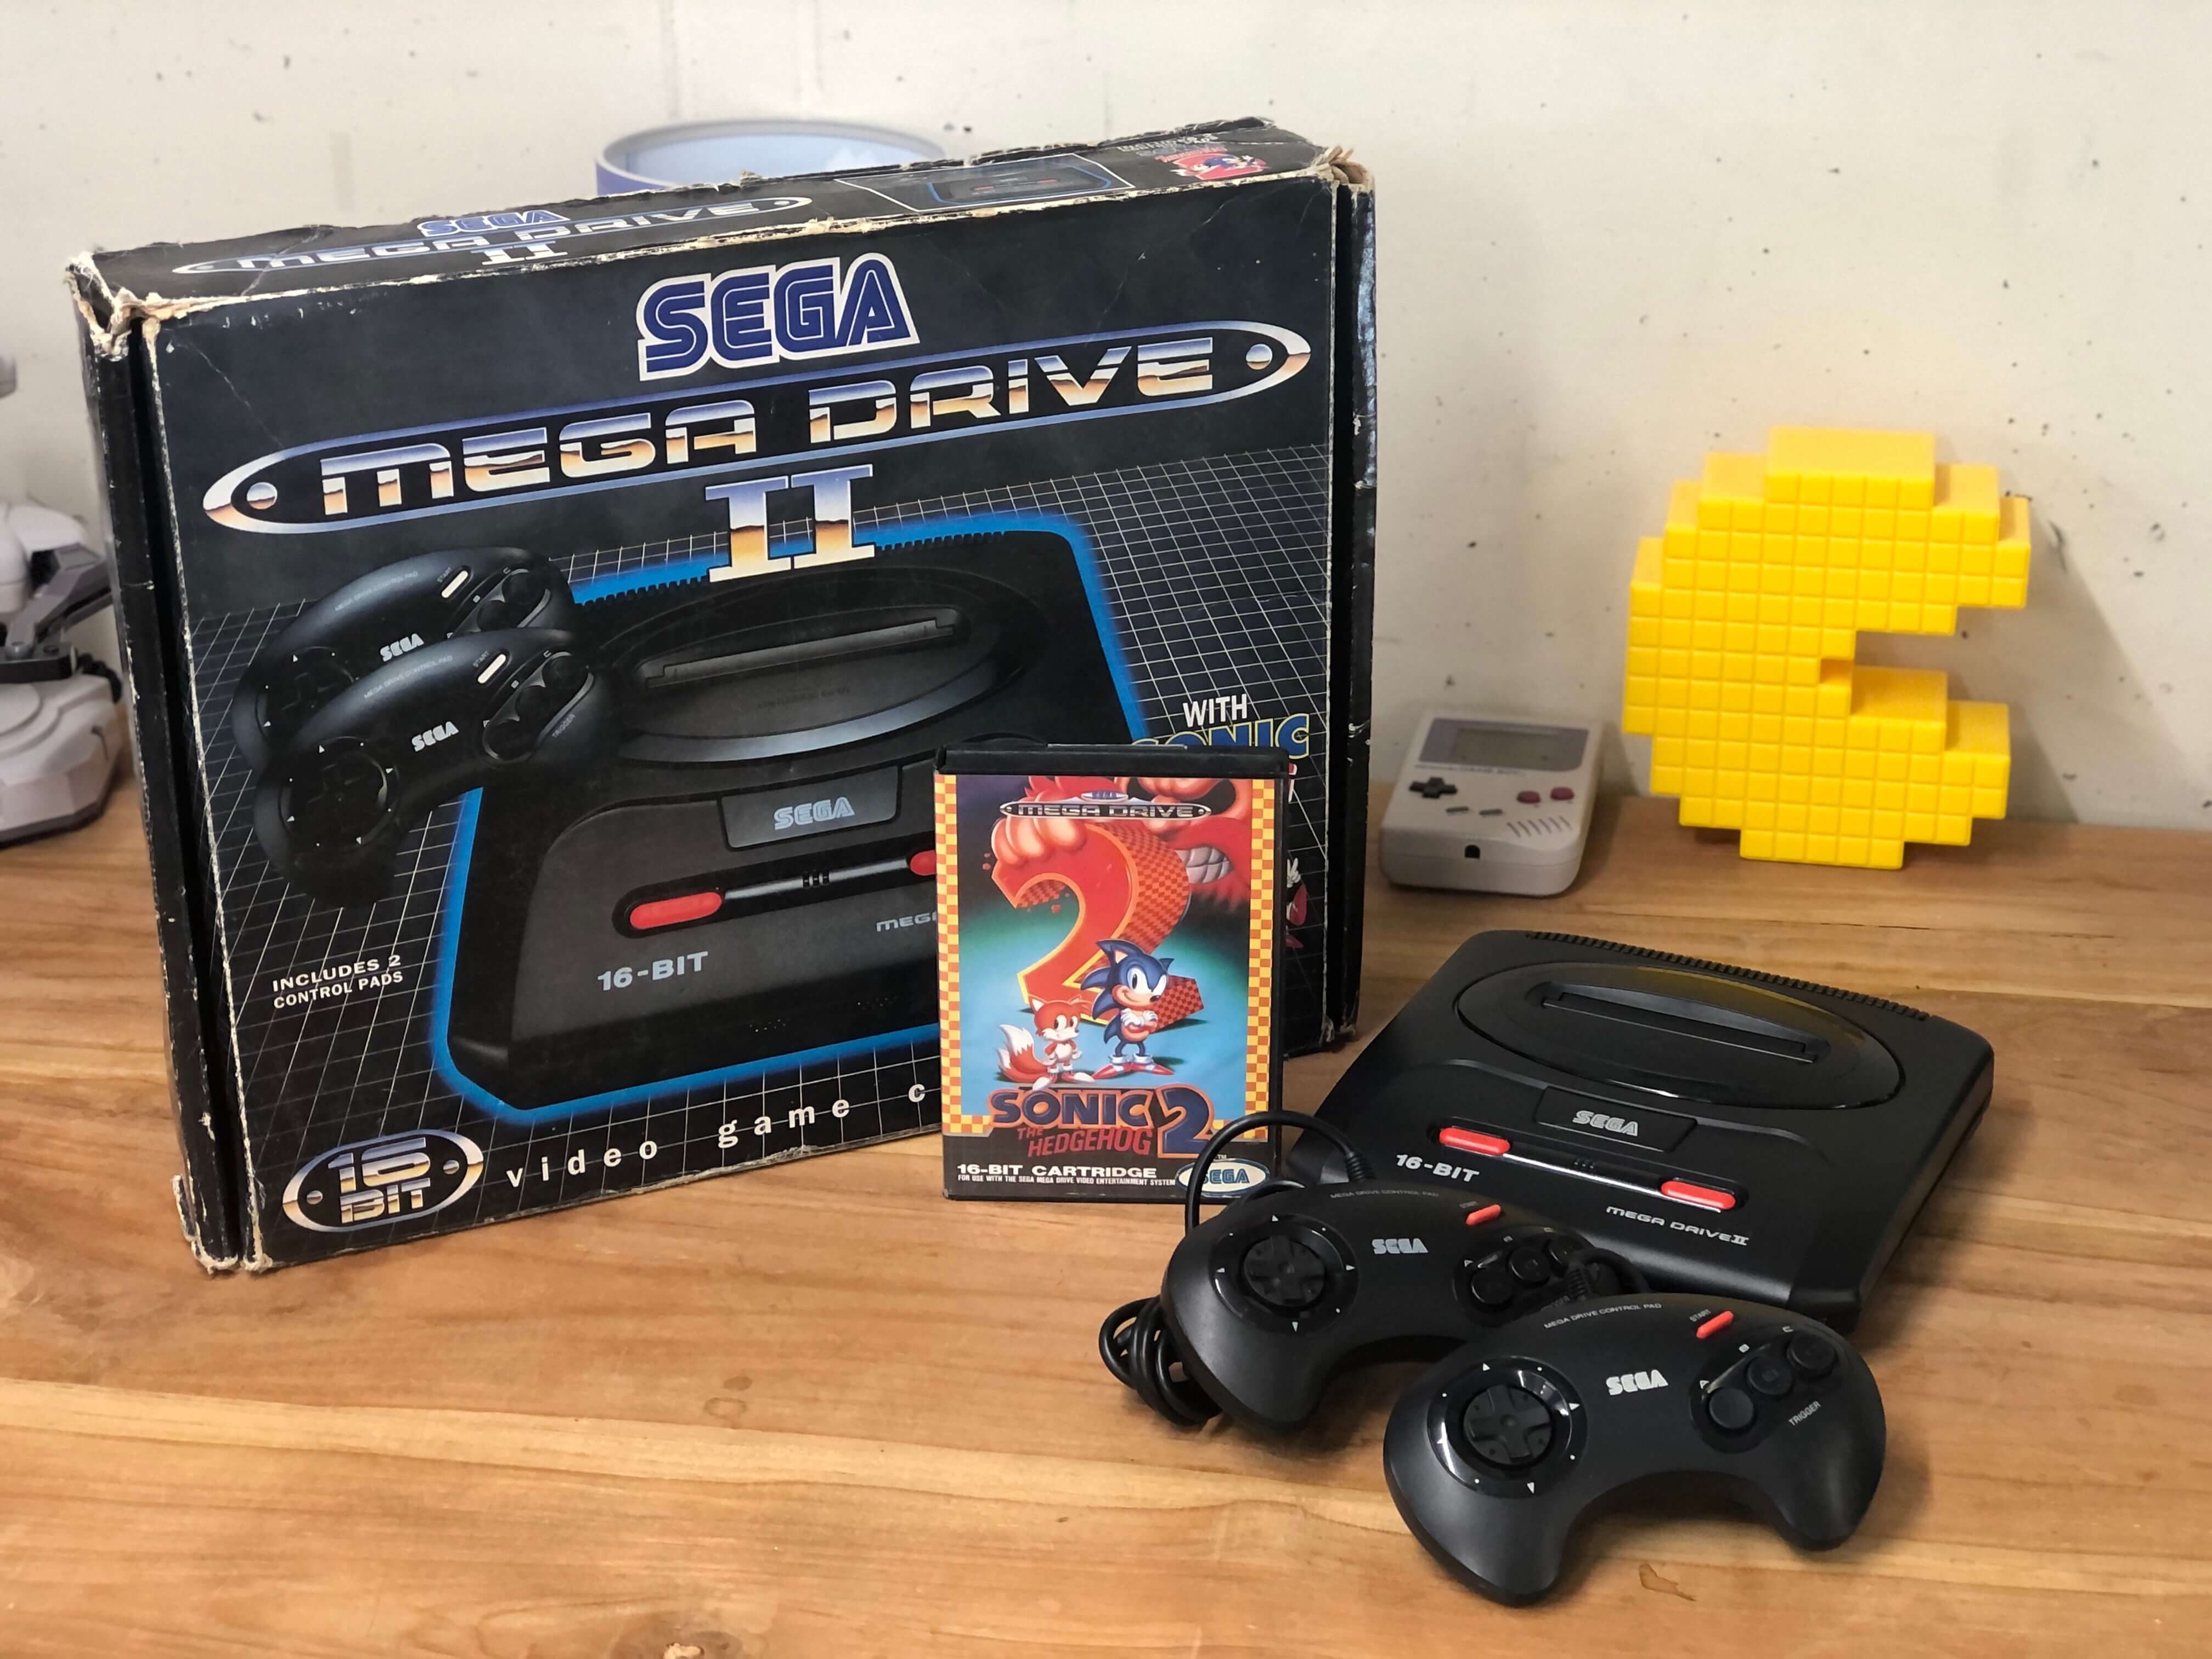 Sega Mega Drive II Console [Complete] - Sega Mega Drive Hardware